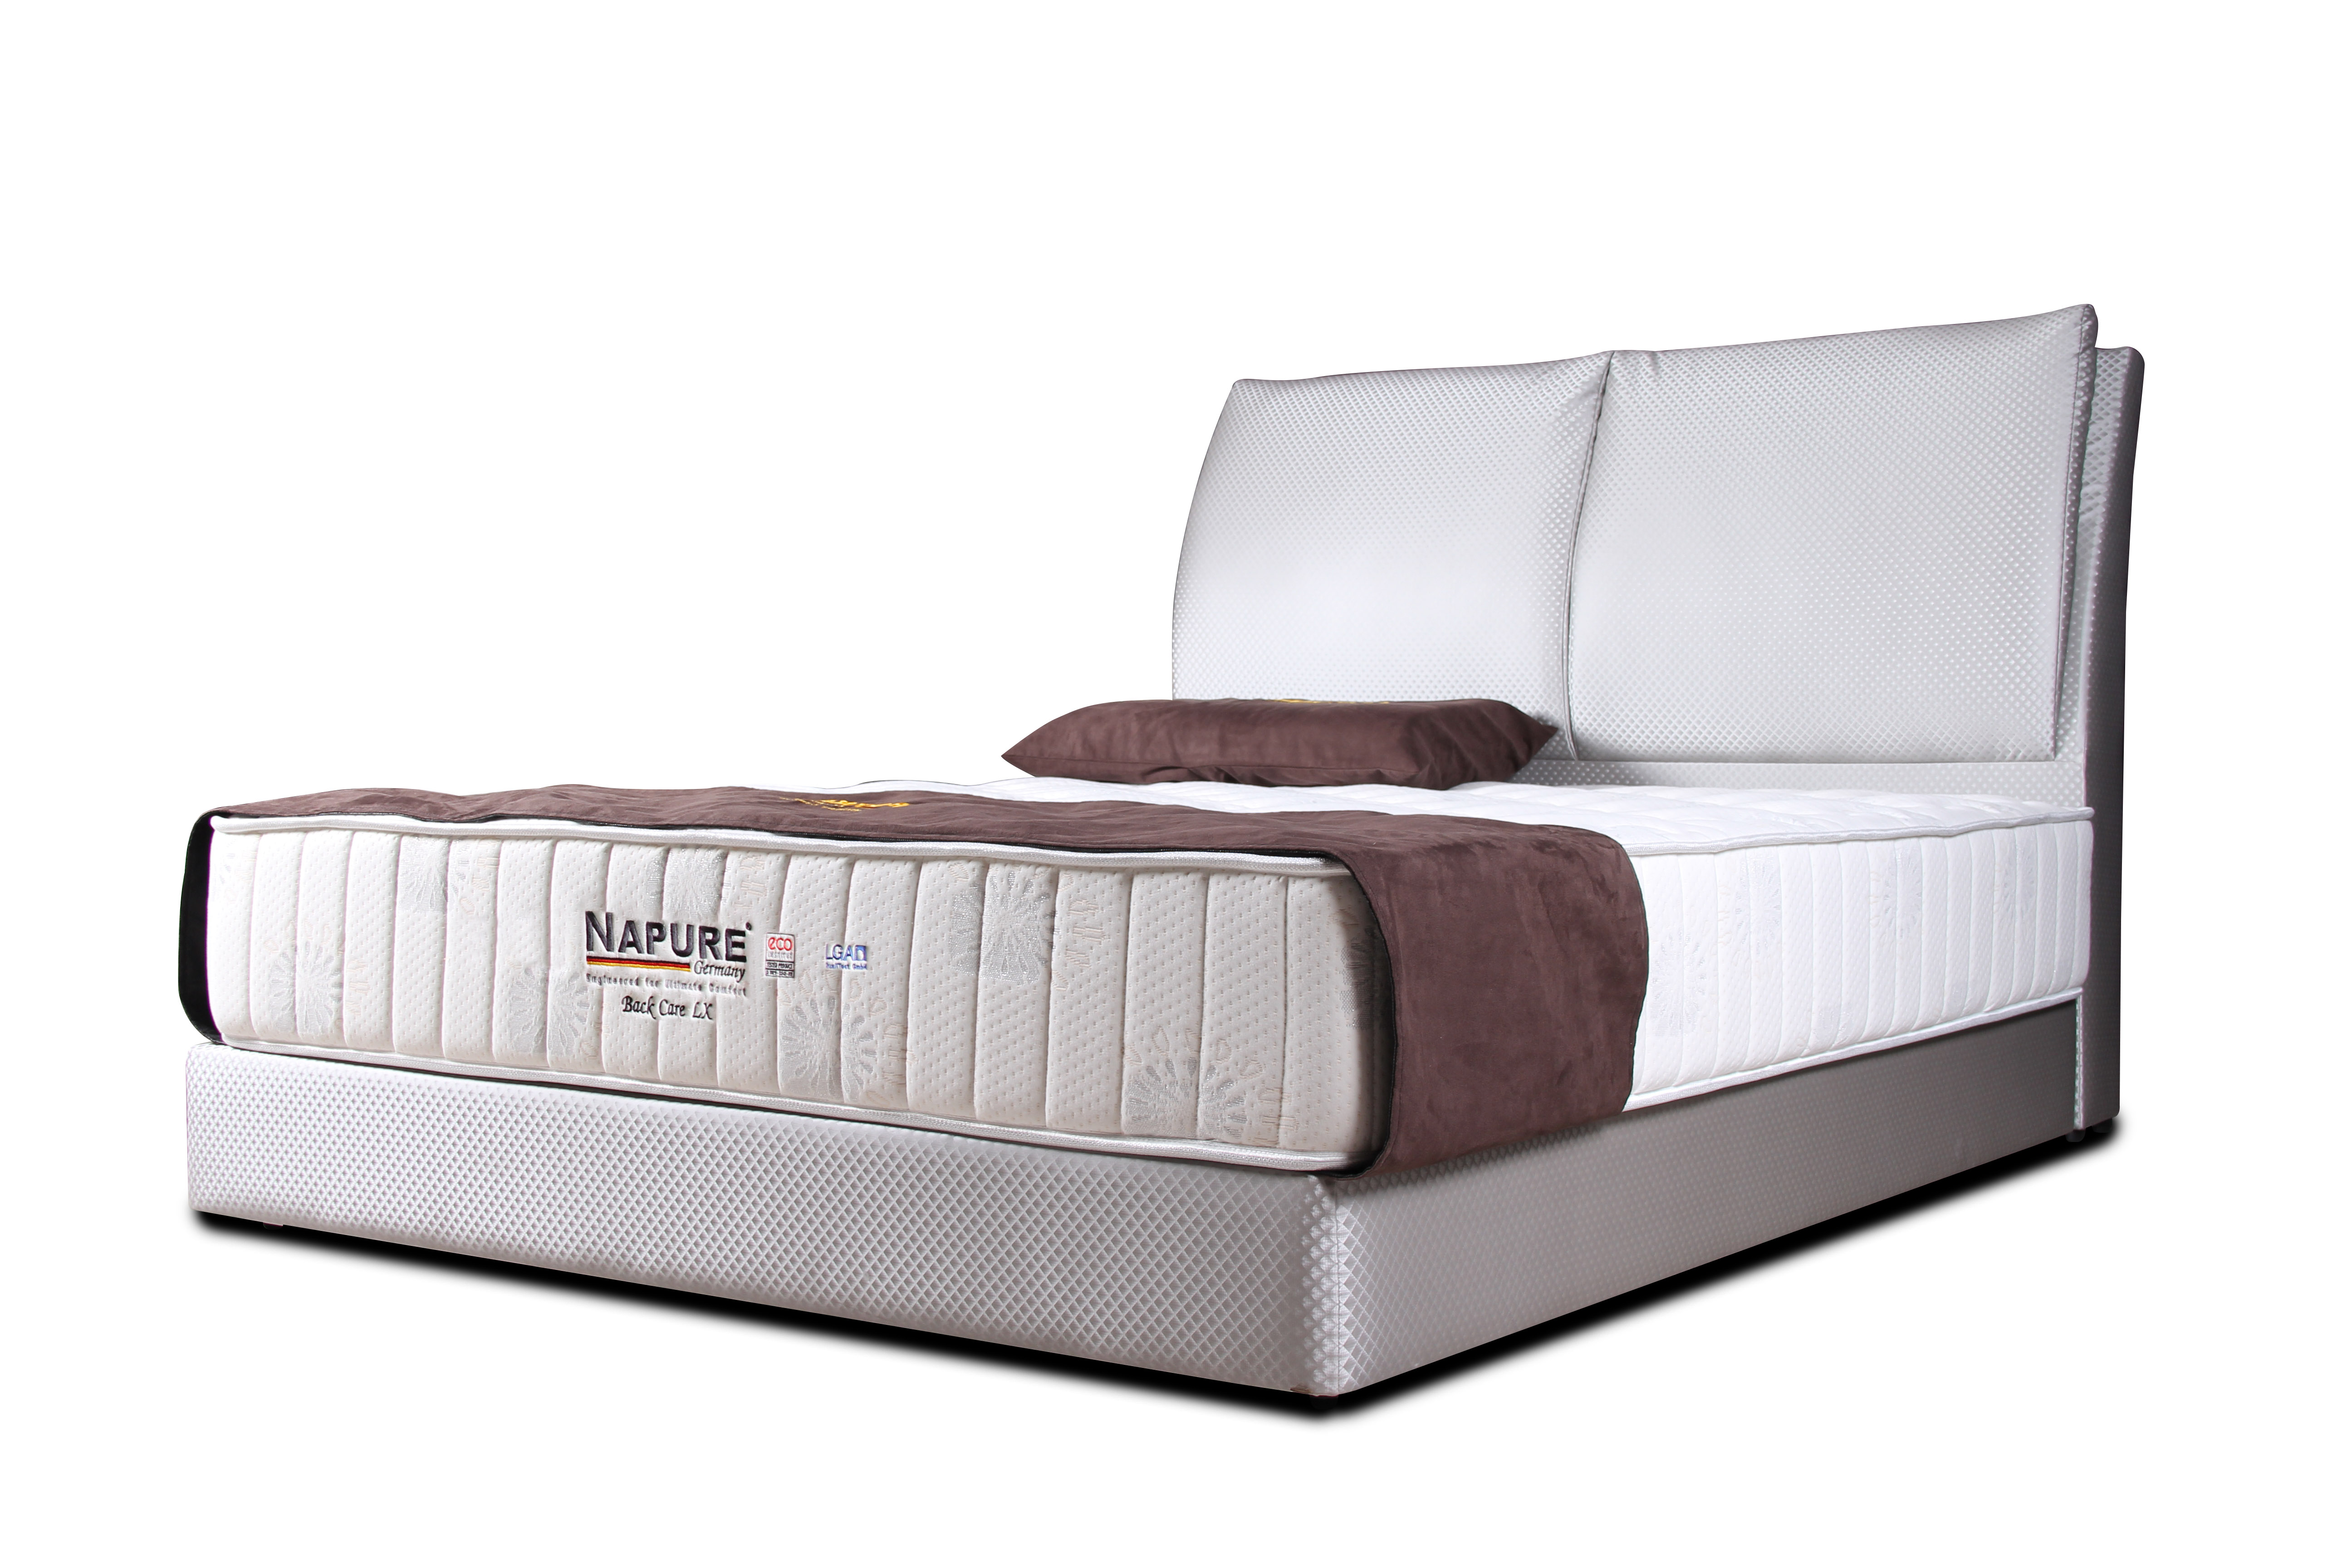 napure mattress alpha air deluxe